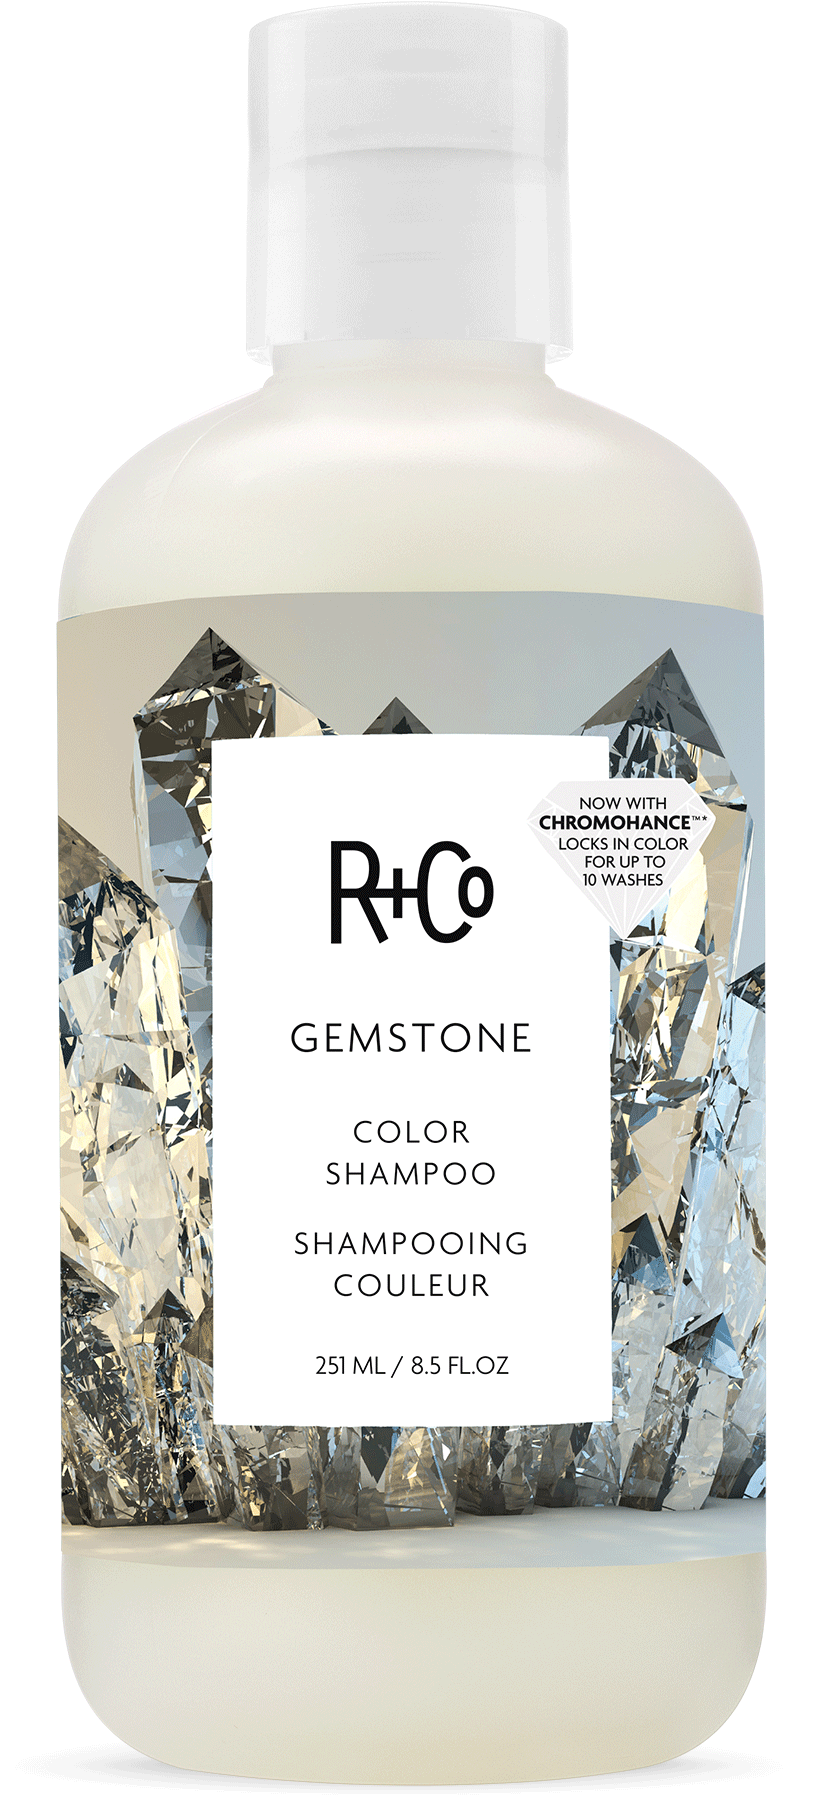 R+CO - Gemstone - Shampooing couleur | 33,8 oz |